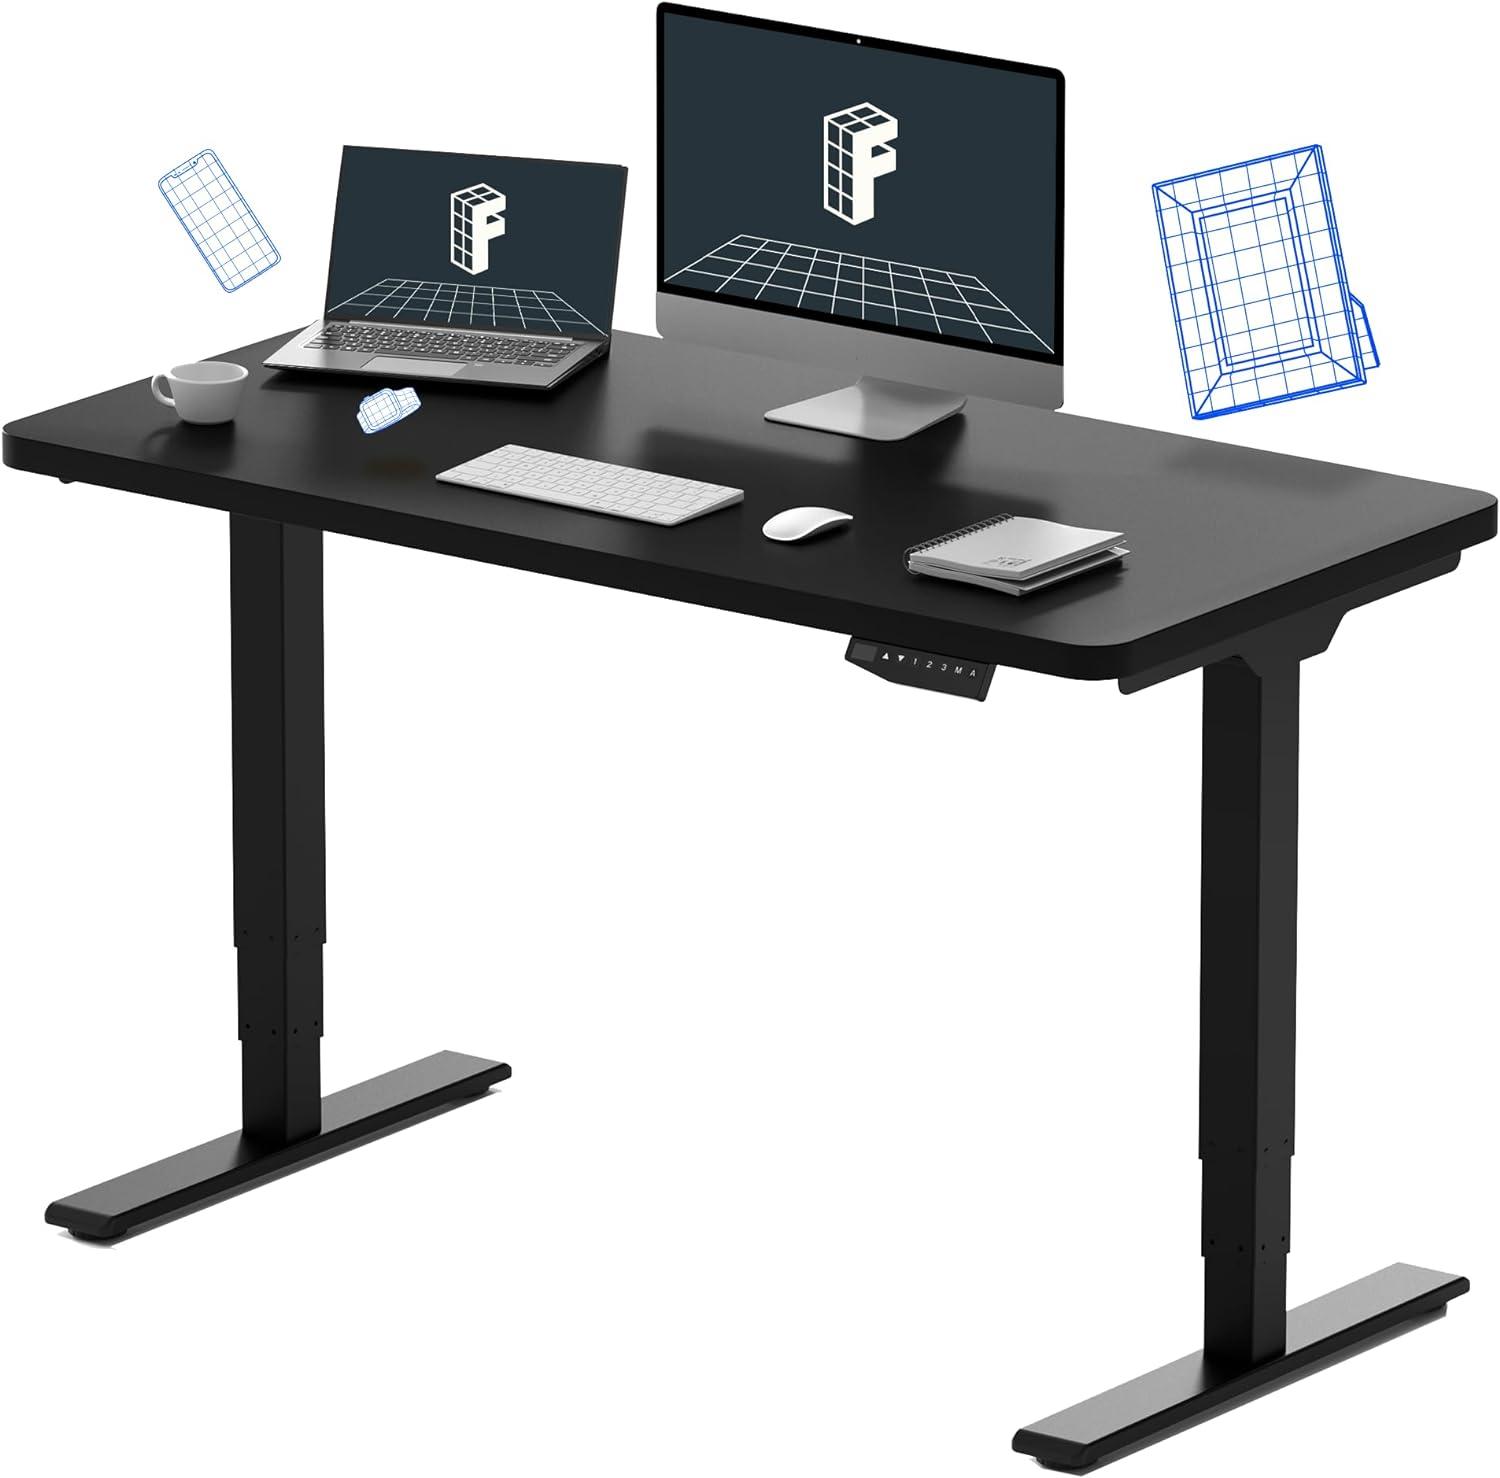 Flexispot 48x30 Height Adjustable Standing Desk for $279.99 Shipped